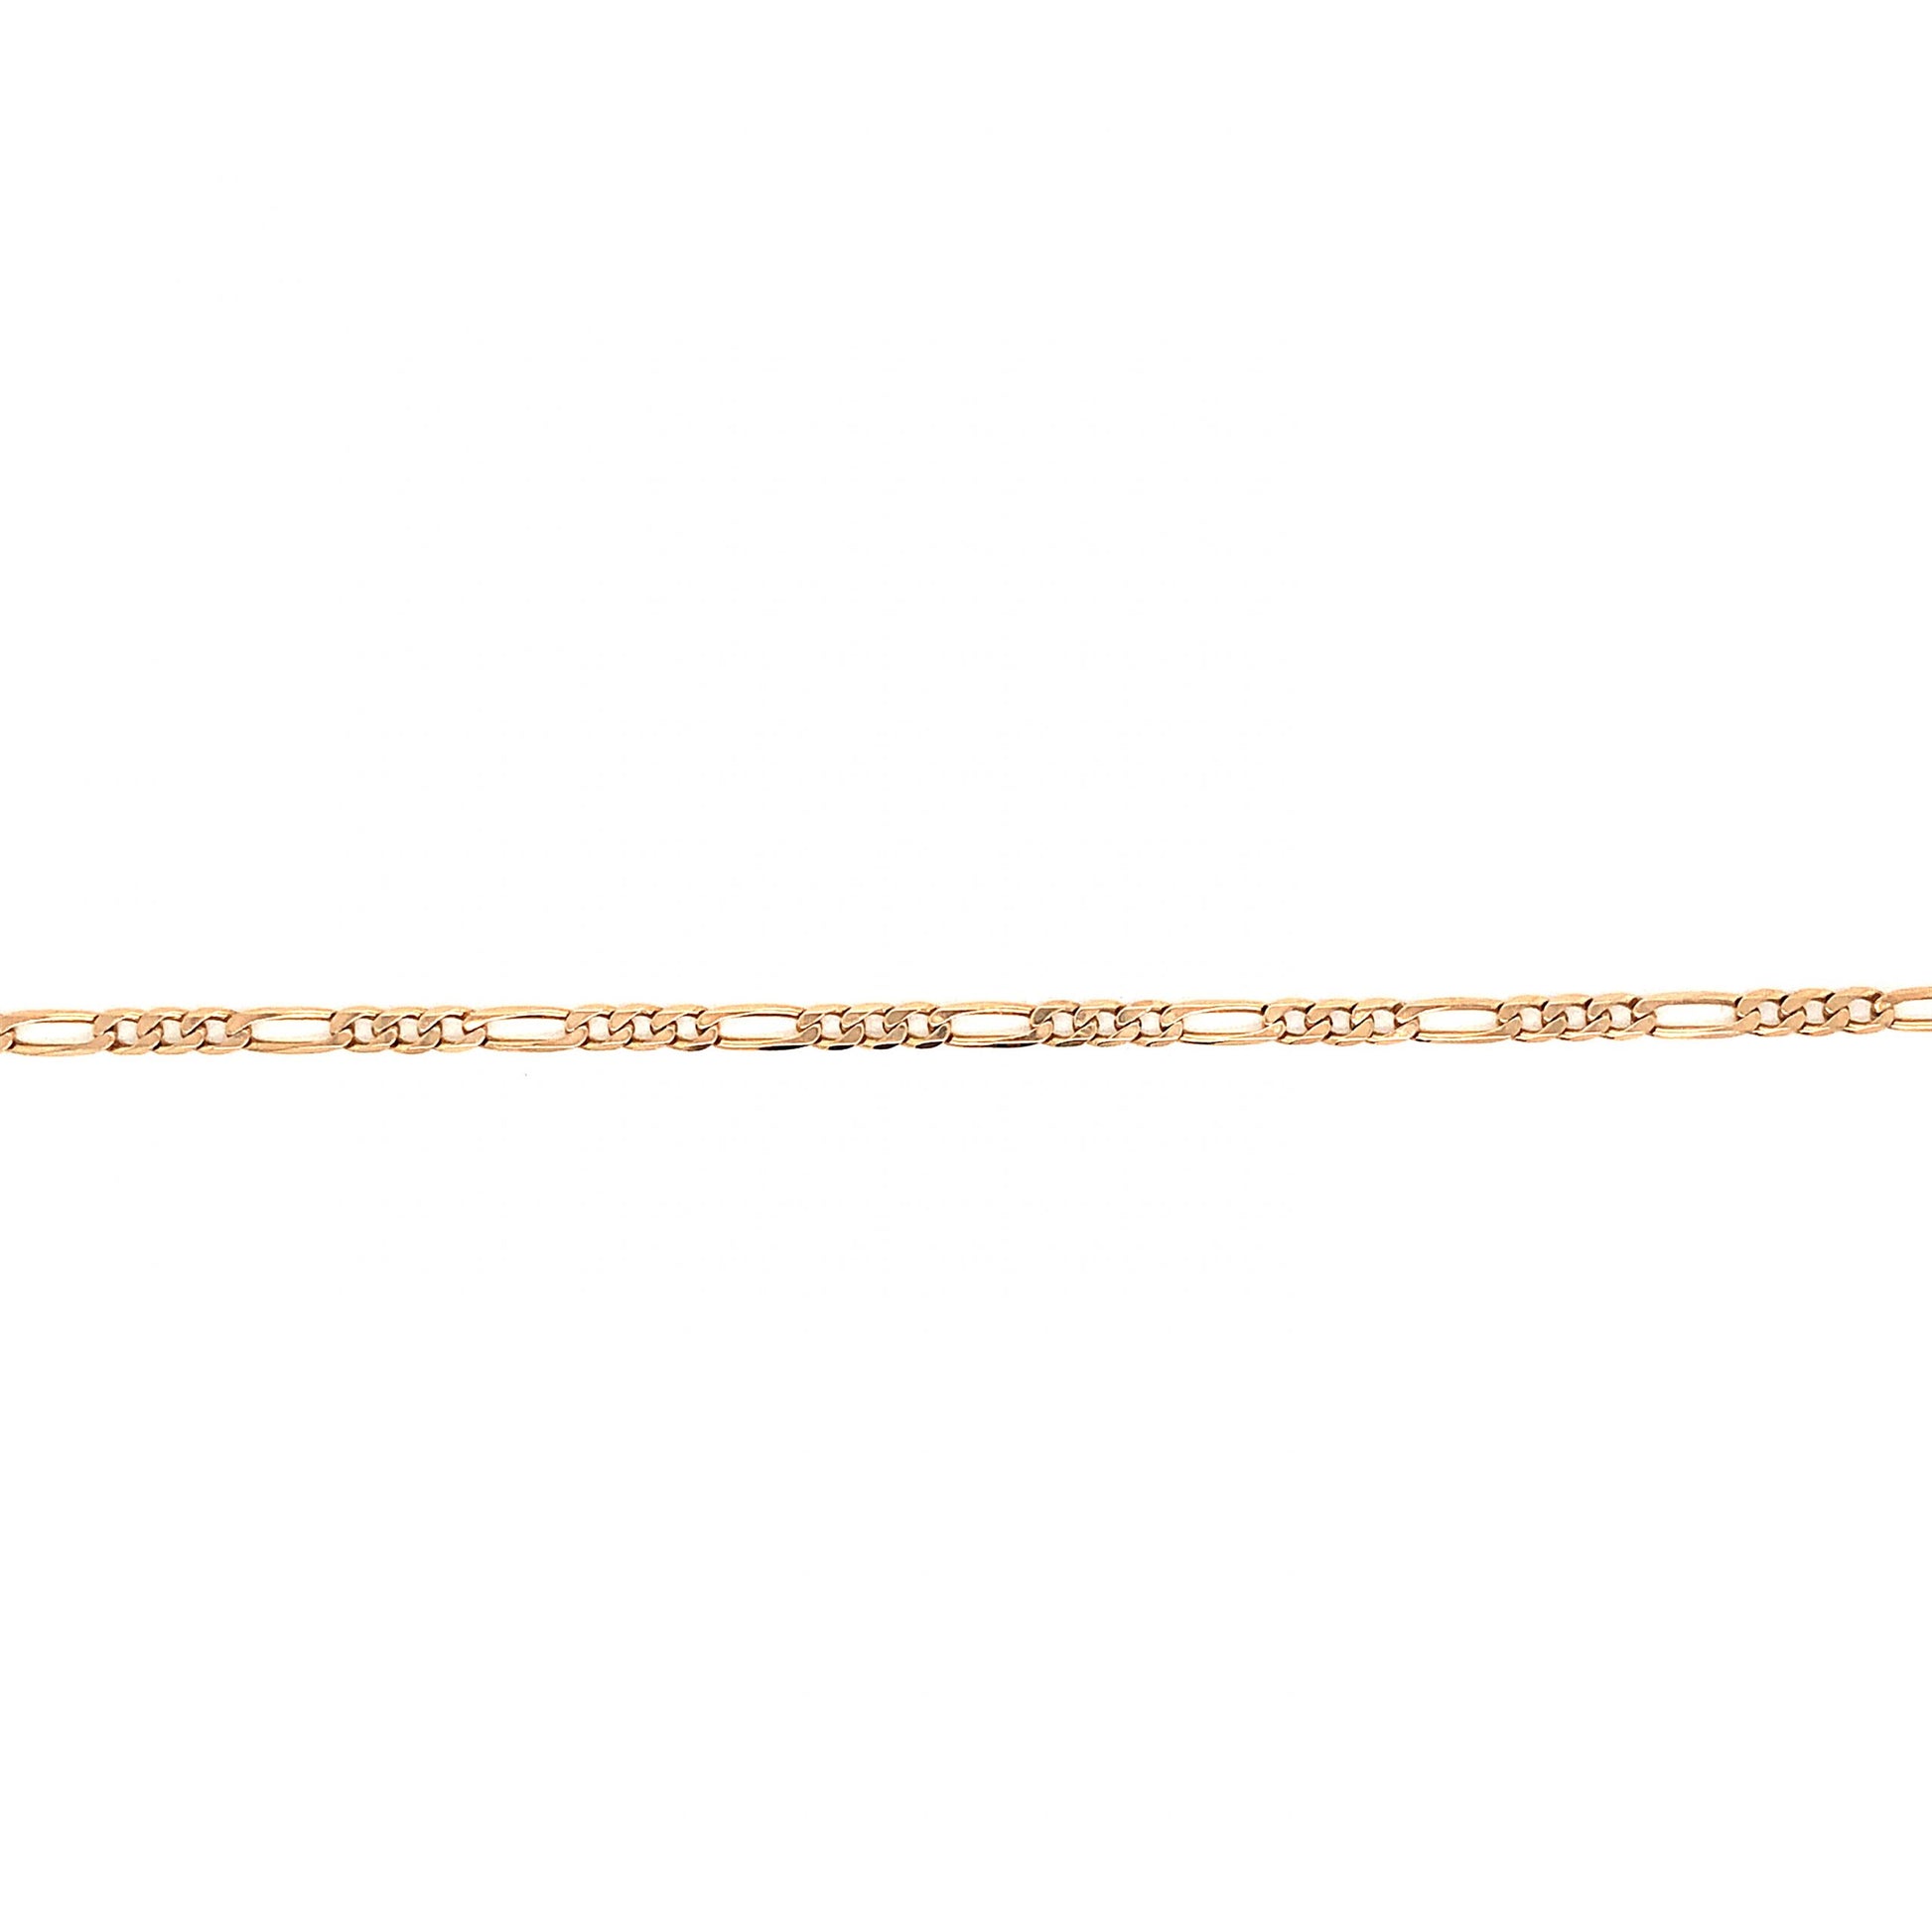 Figaro Chain Bracelet in 14k Yellow GoldComposition: 14 Karat Yellow GoldTotal Gram Weight: 2.4 gInscription: 14KT ITALY